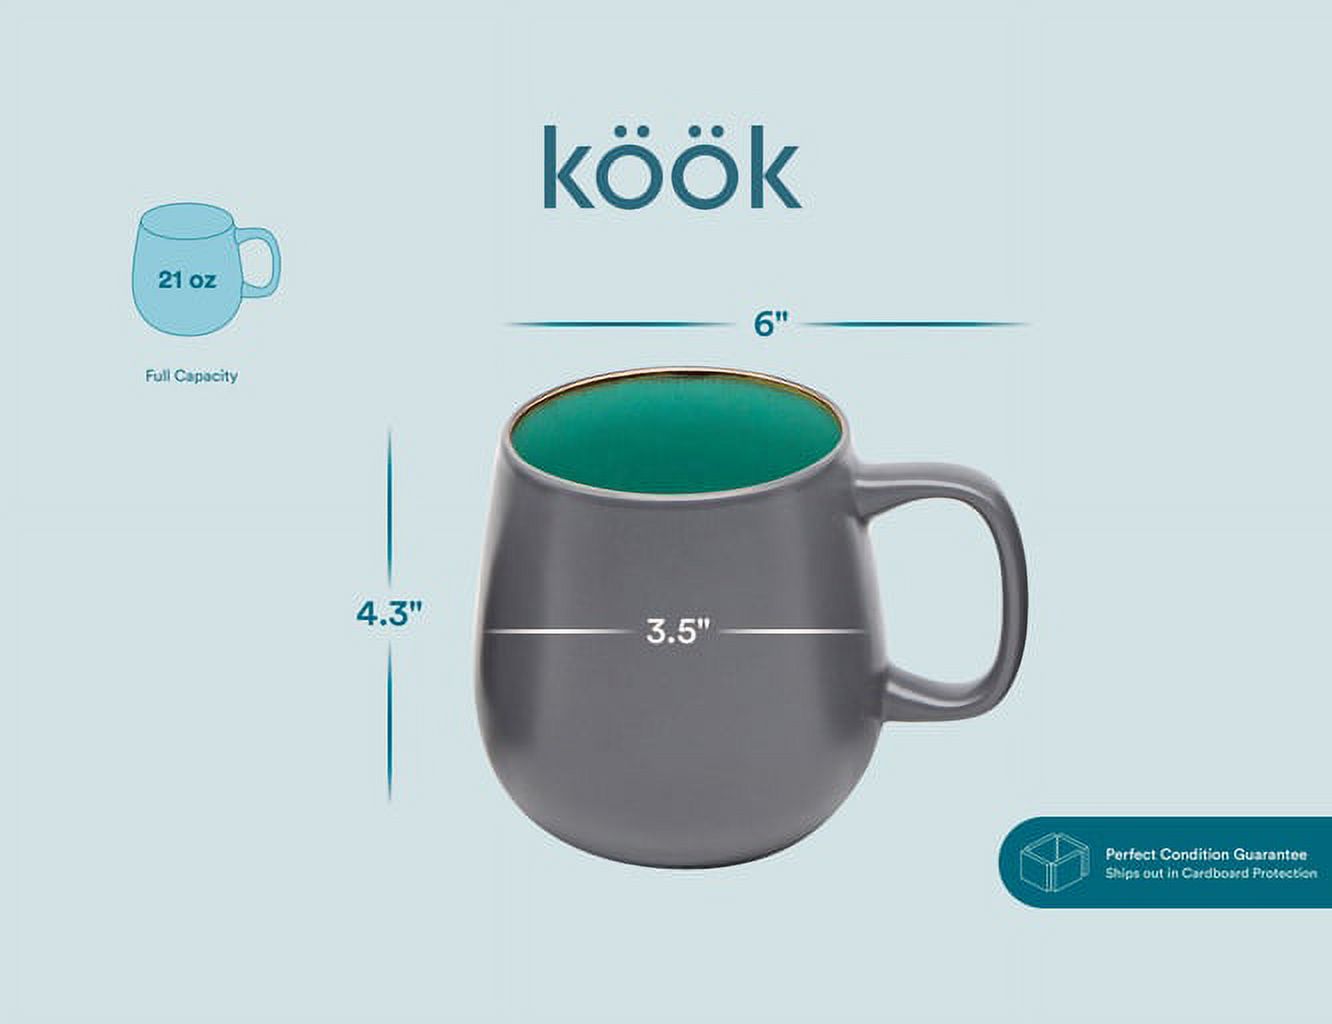 Kook Deco Large Coffee Mugs Set of 4, 21 Oz Multicolor Ceramic Mugs Drinkware - image 5 of 5